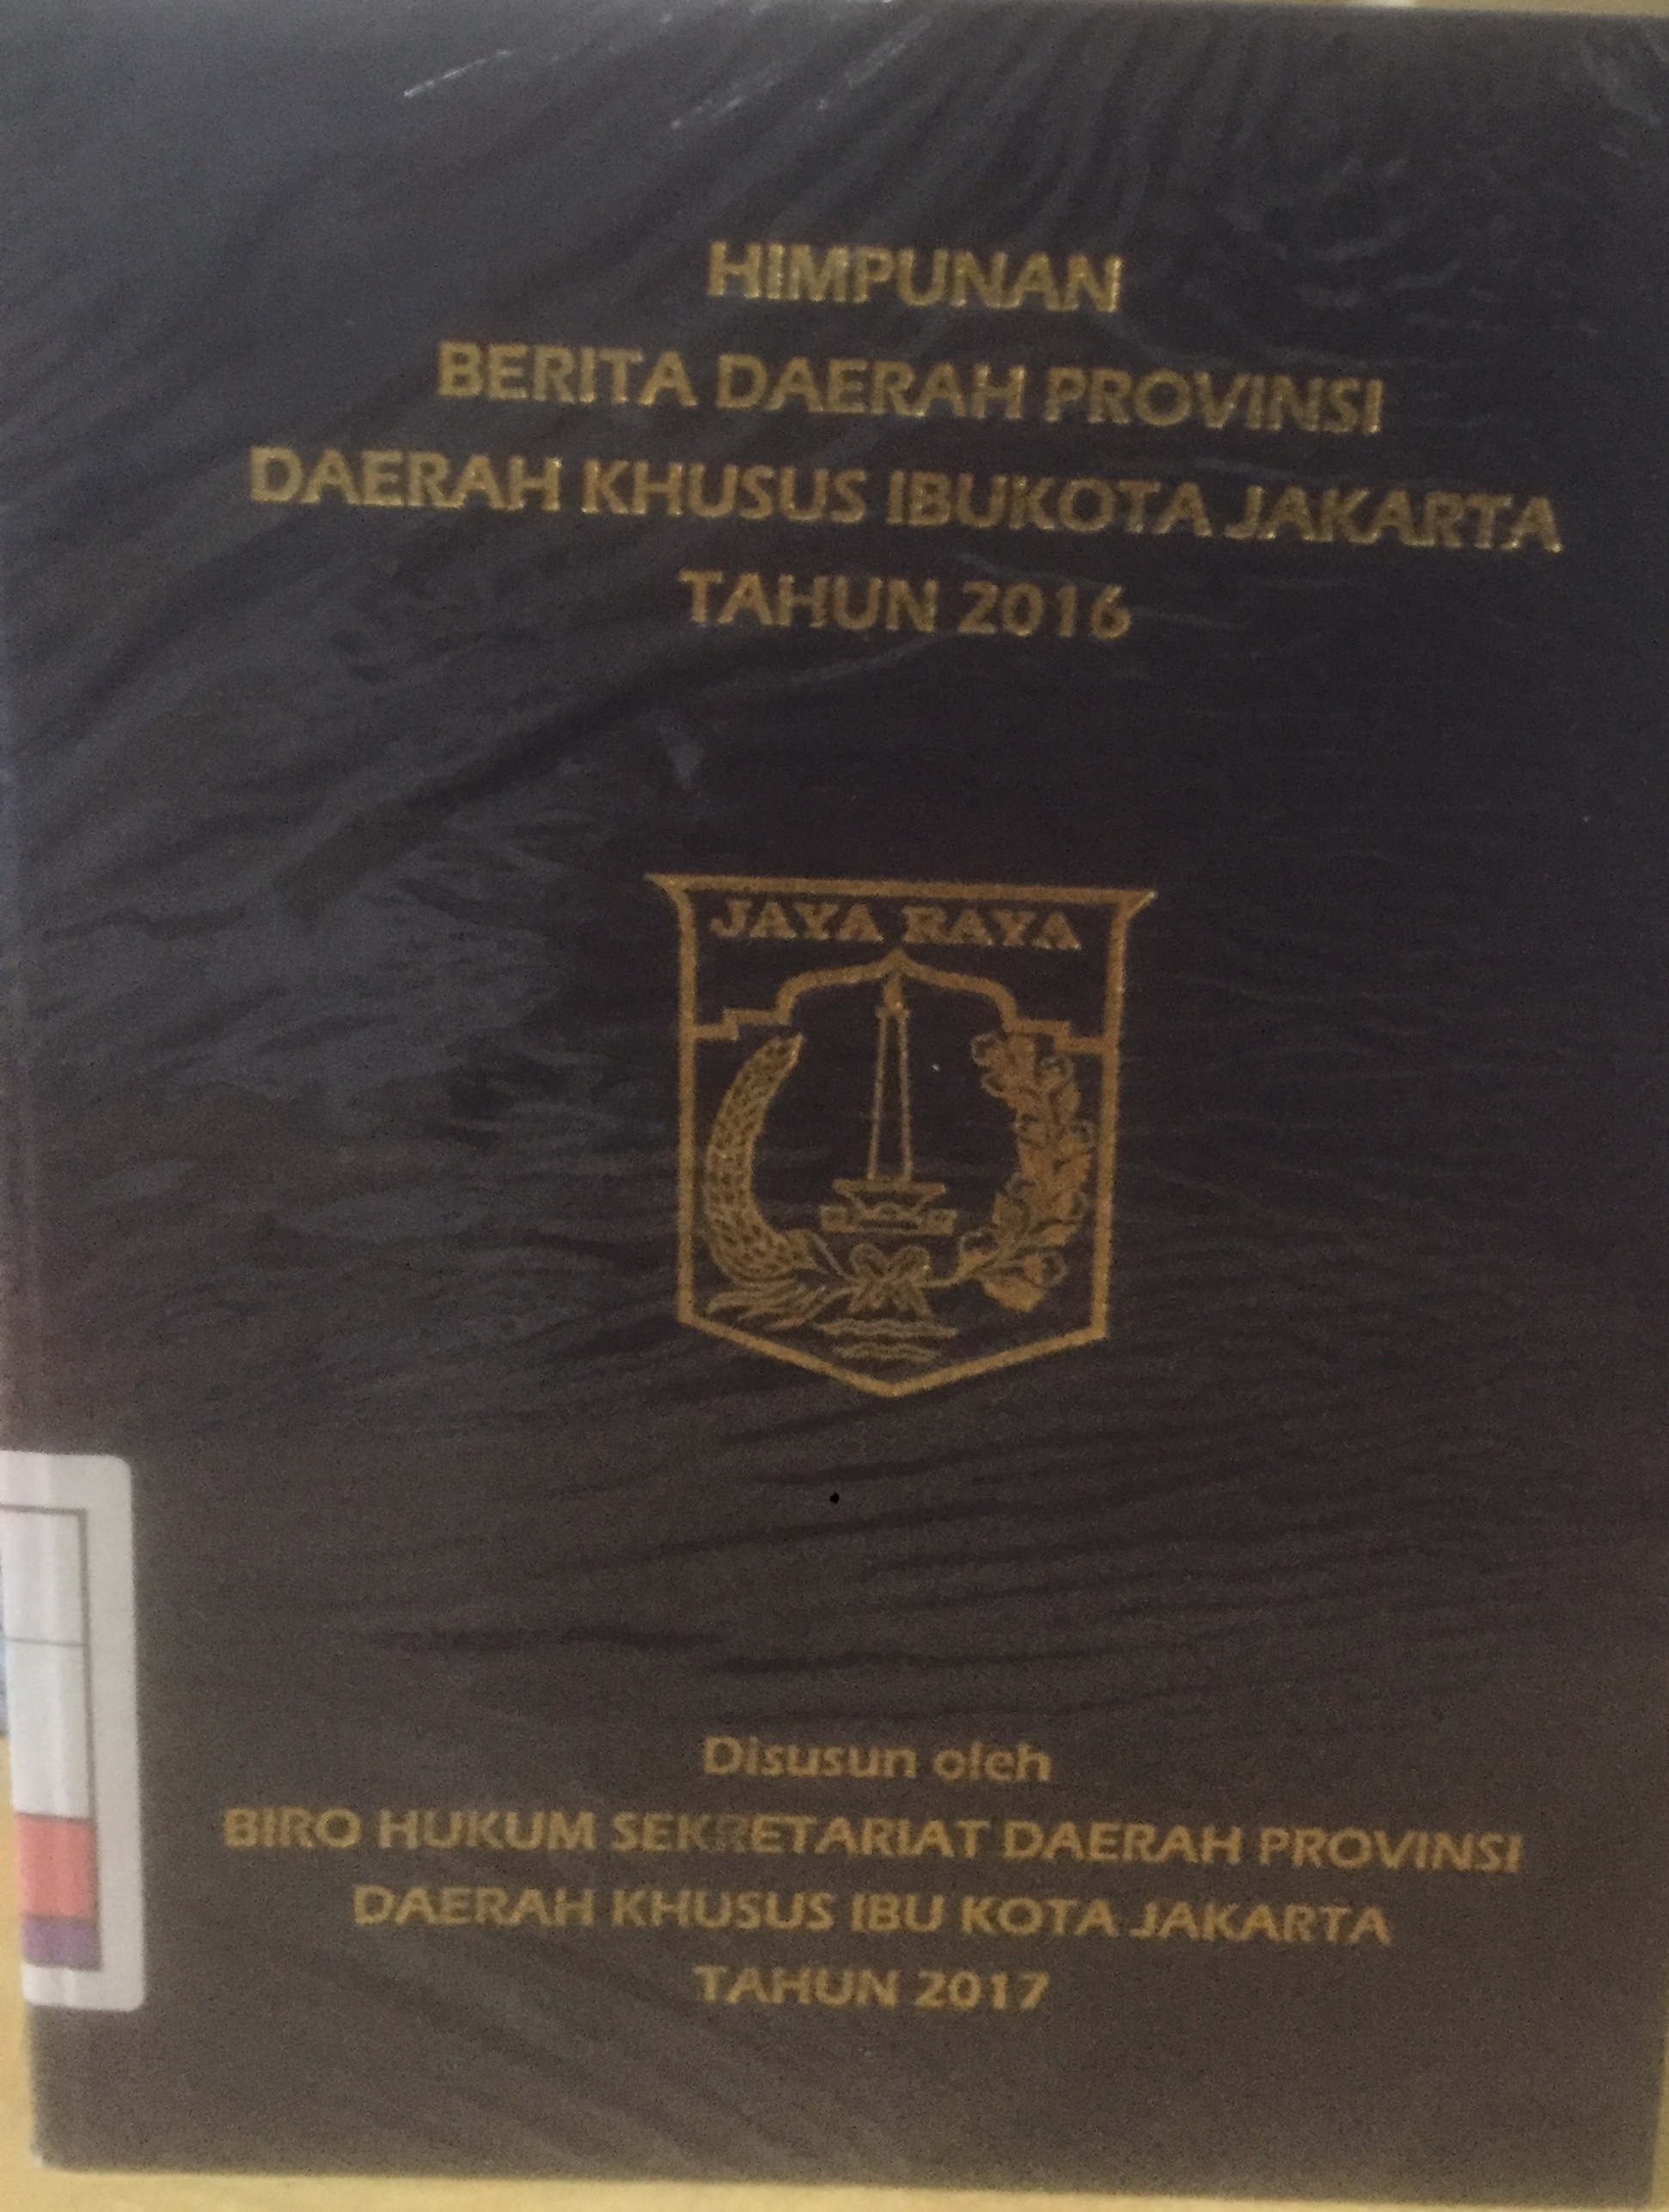 Himpunan Berita Daerah Provinsi Daerah Khusus Ibu Kota Jakarta Tahun 2016, Vol. III